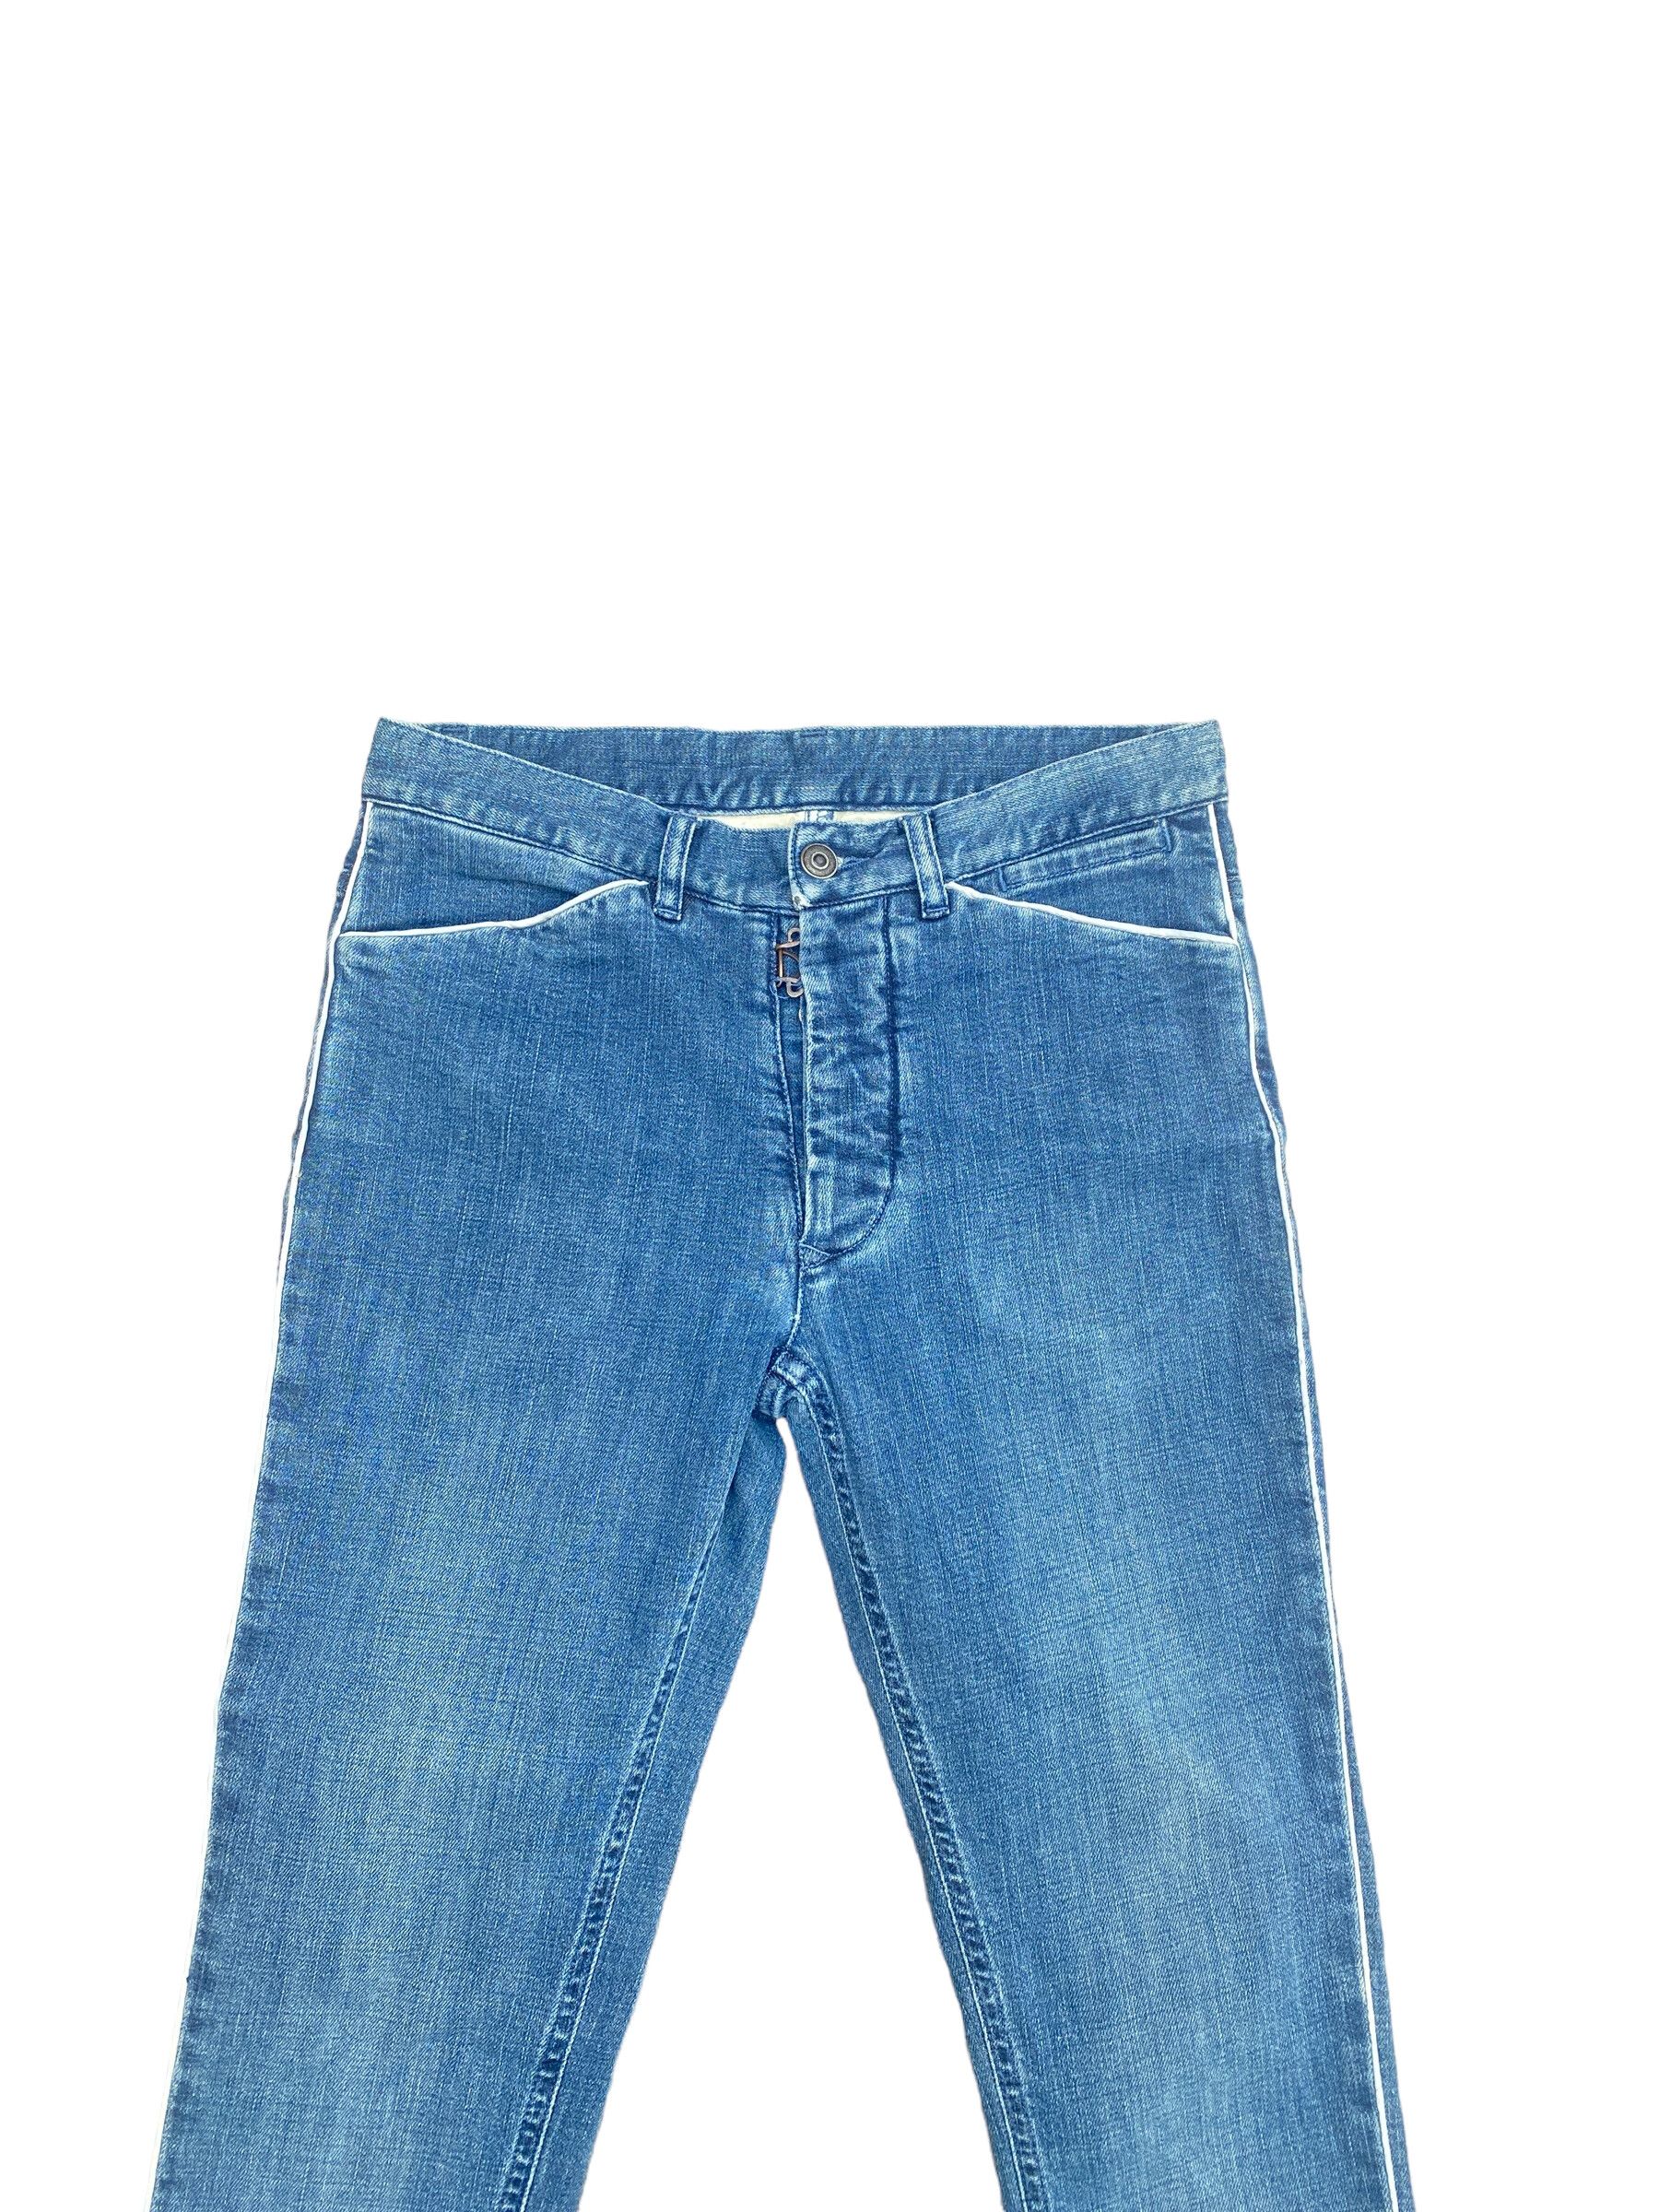 Maison Margiela SS 2008 Light blue denim jeans Size US 28 / EU 44 - 4 Thumbnail